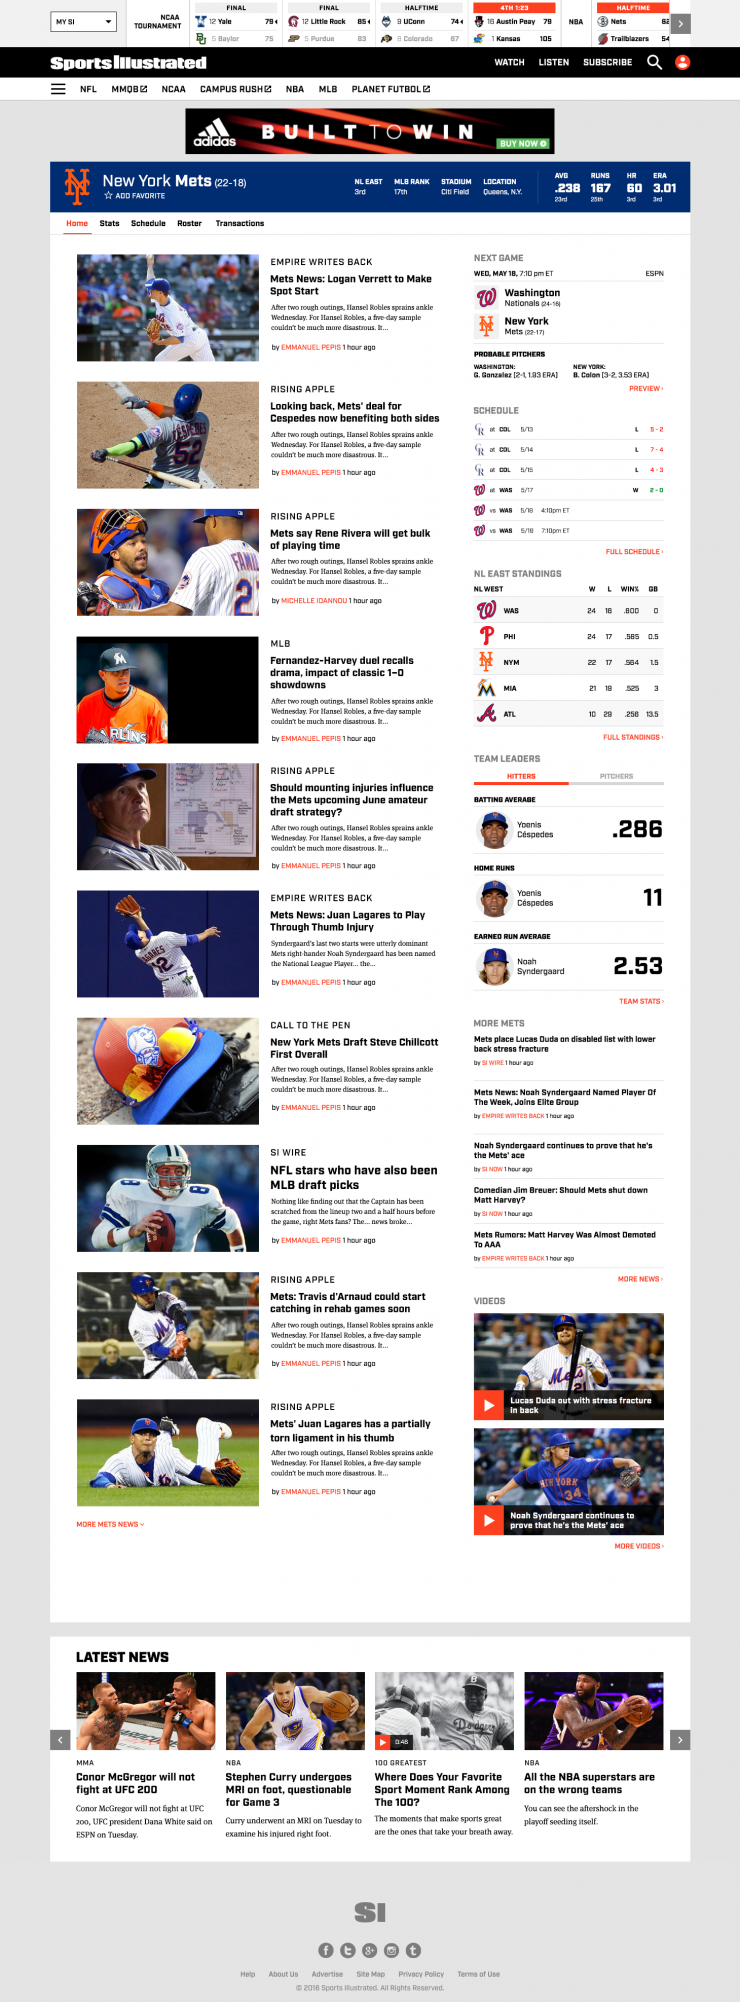 Sports Illustrated 2016 Redesign – Desktop